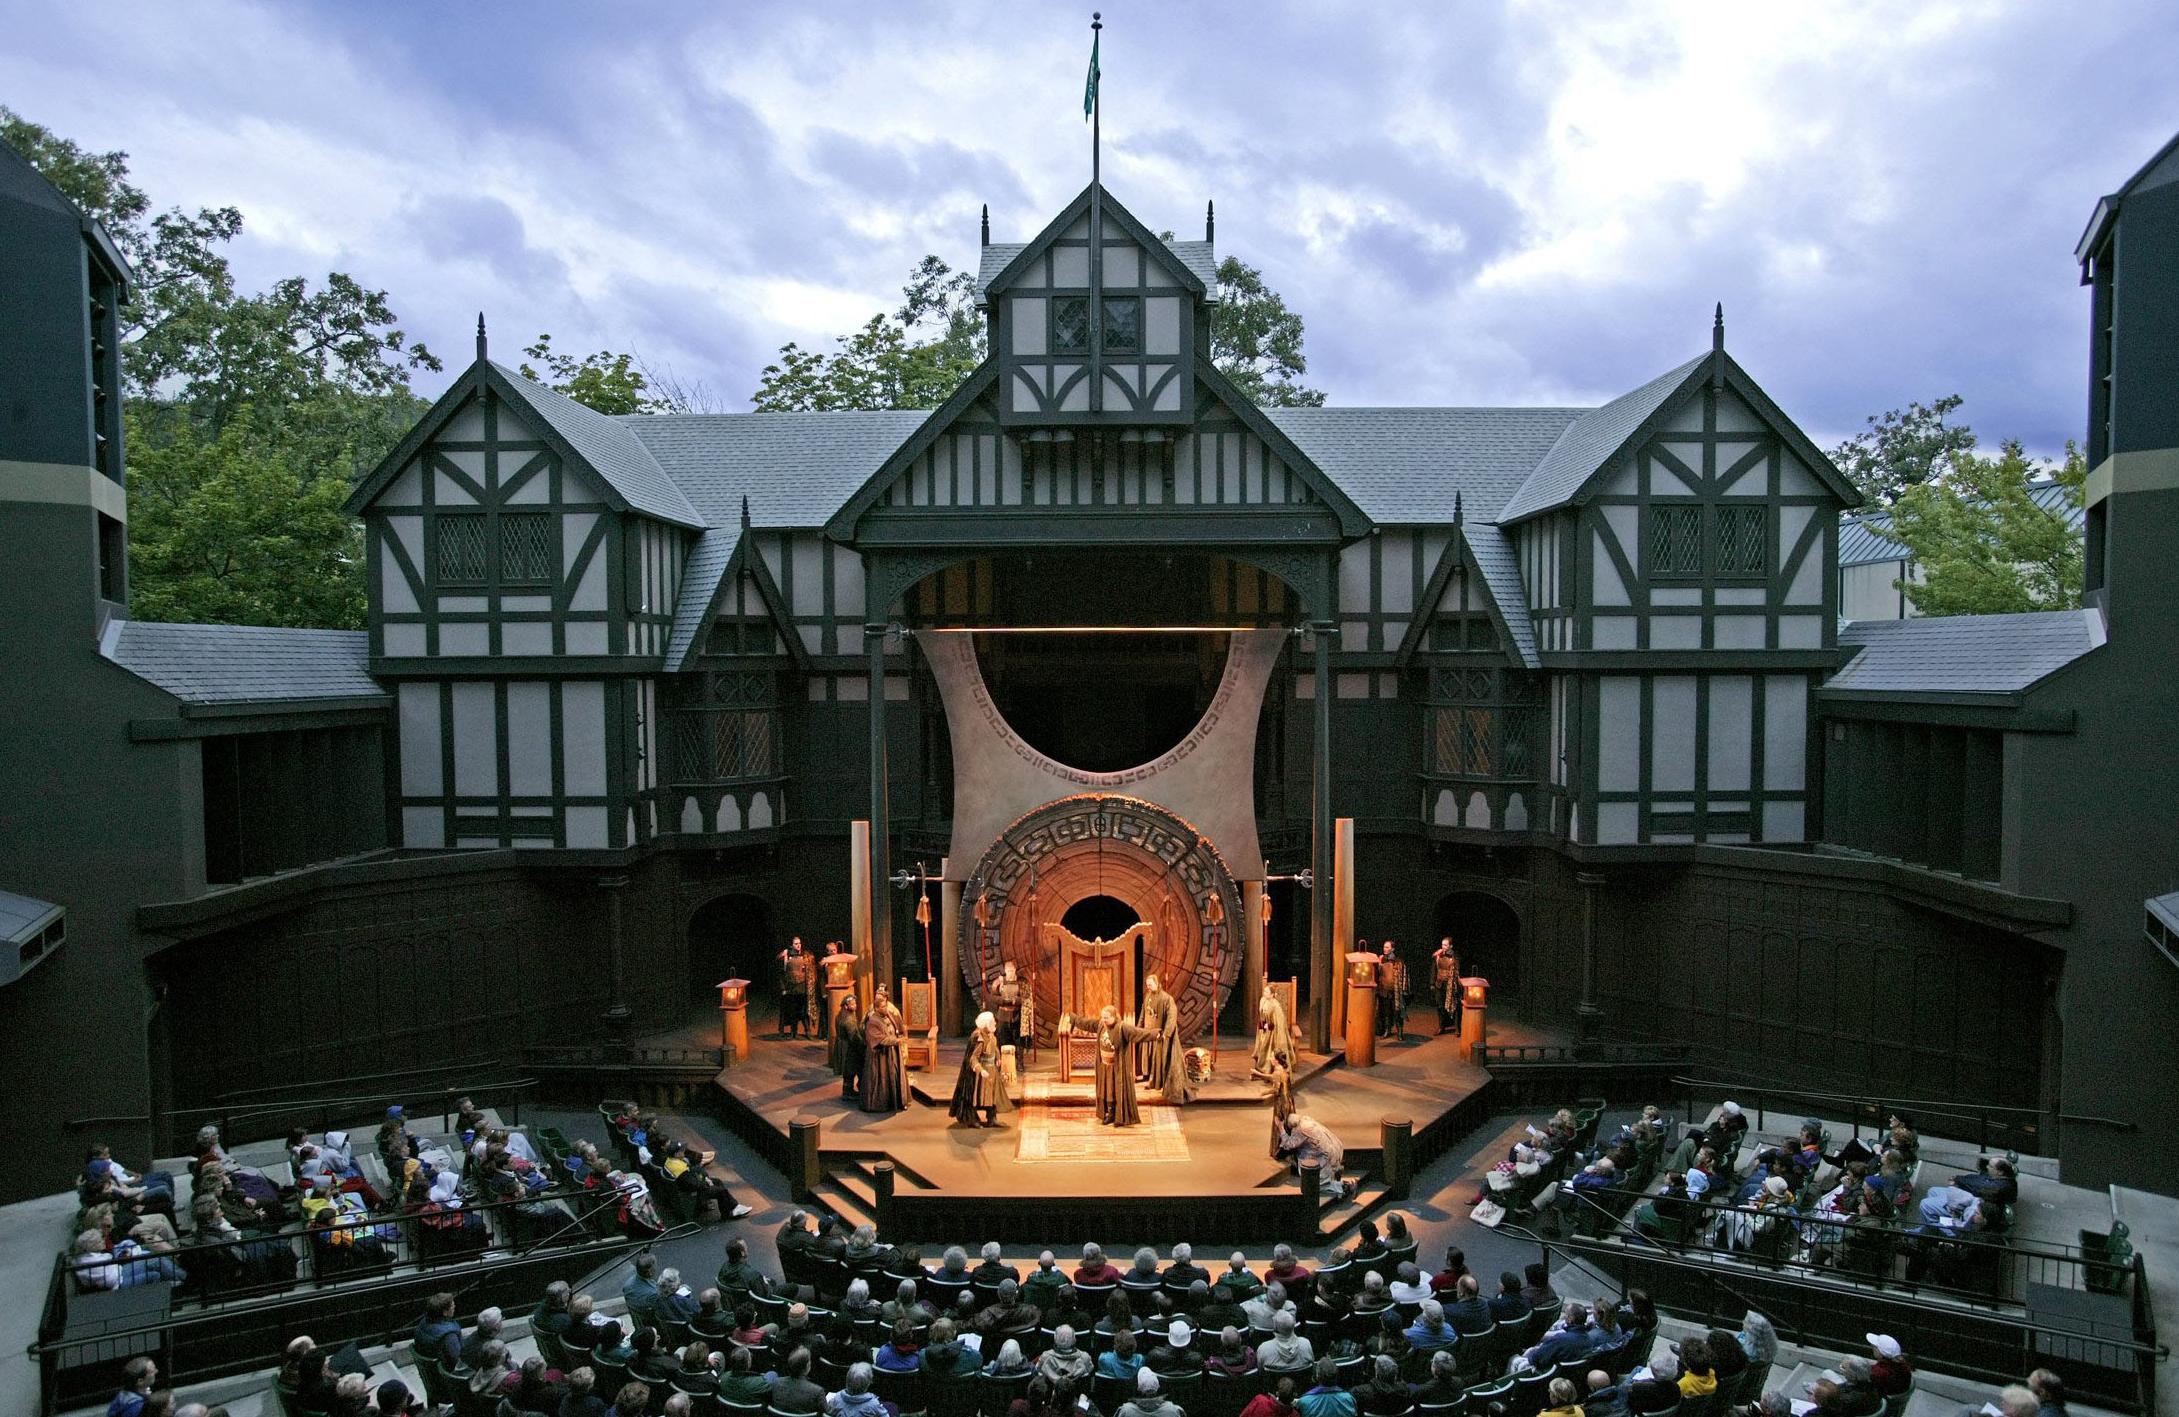 Oregon Shakespeare Festival receives 5 million donation The